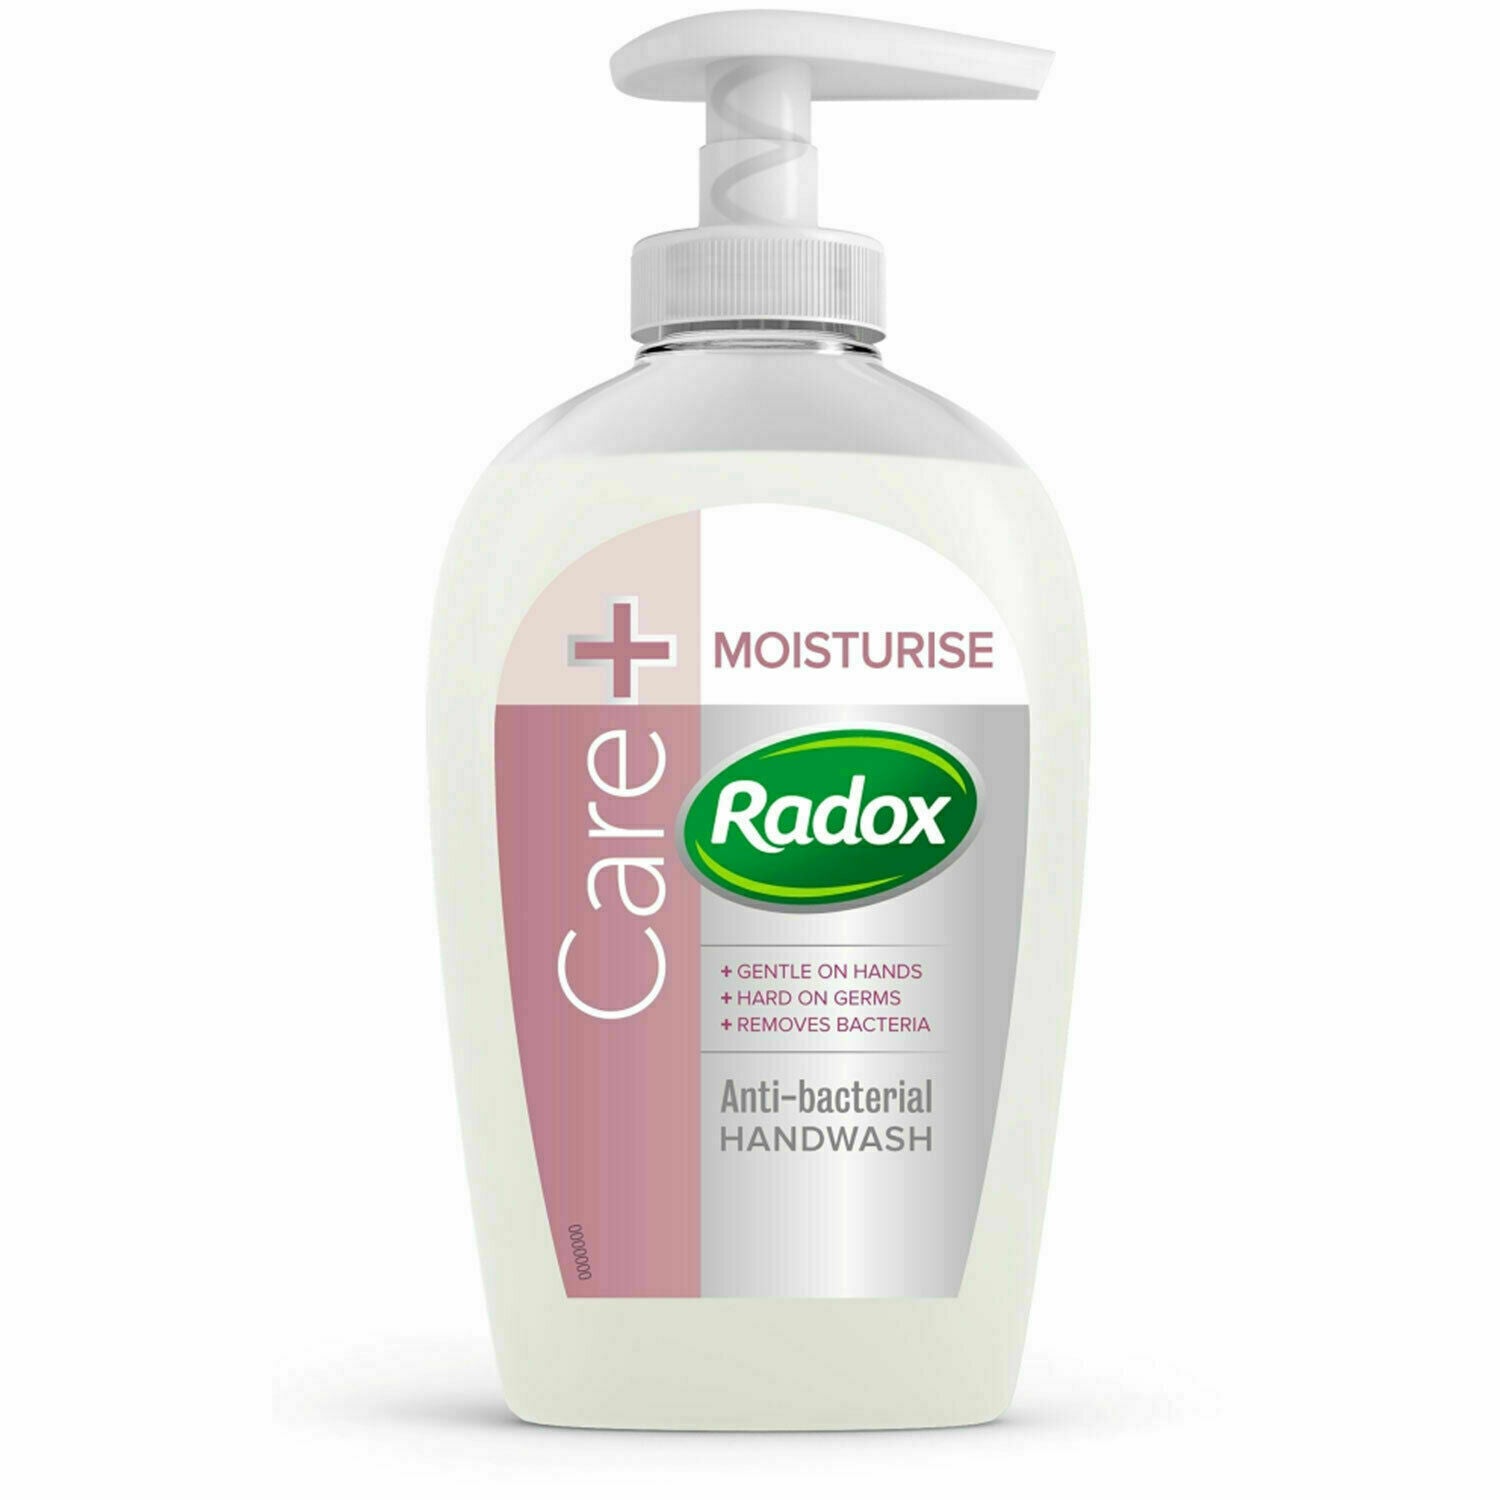 Radox Moisturising Anti-Bacterial Handwash Chamomile Jojoba Oil Scent 250 ml